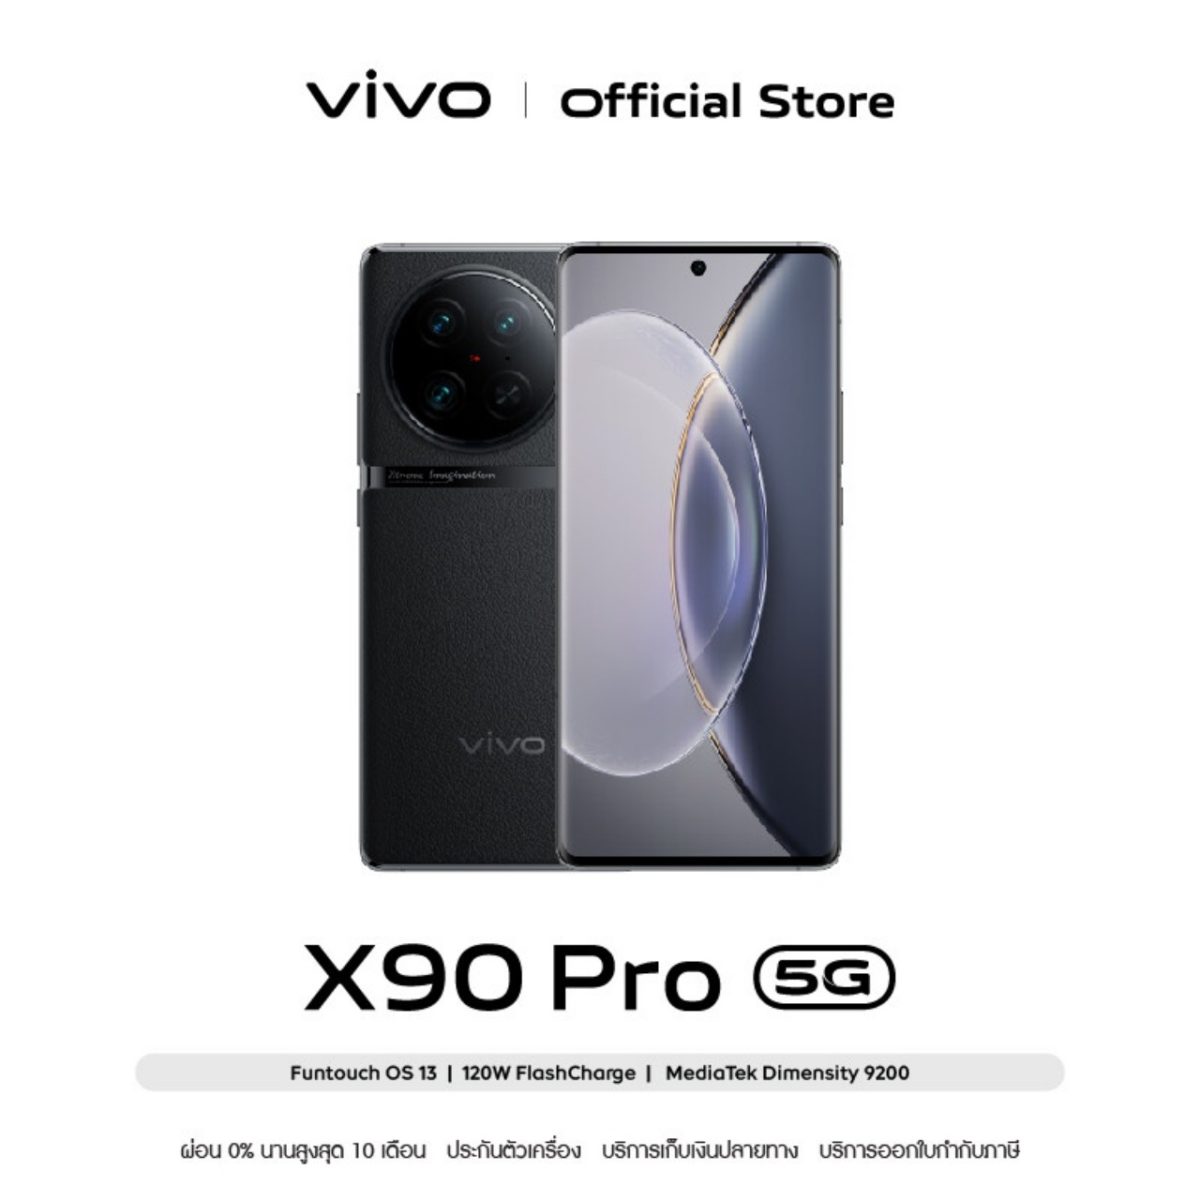 VIVO X90 PRO 5G